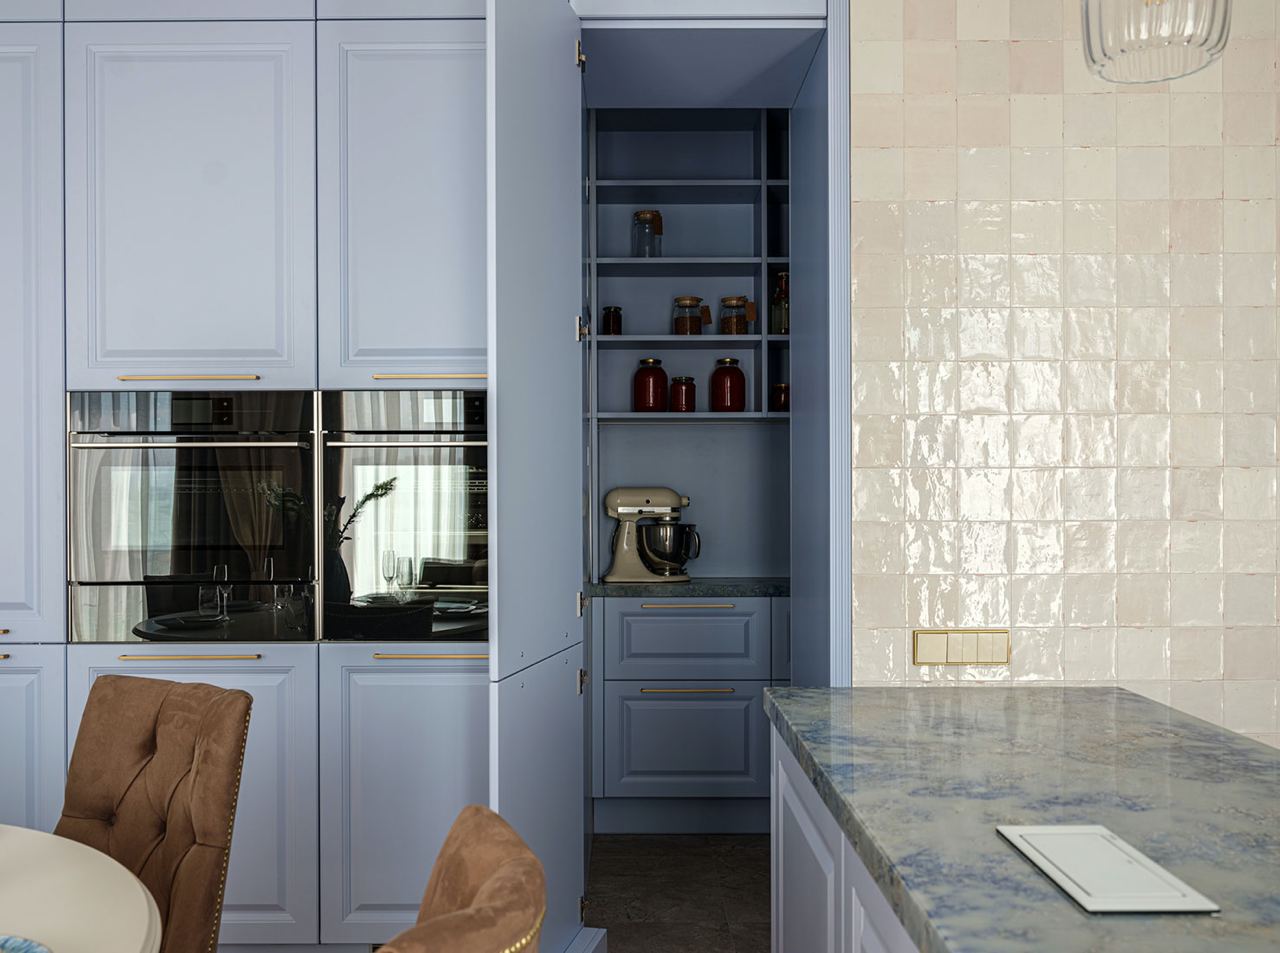 Living Room Interior Design: Ideas and Inspiration for Your Home